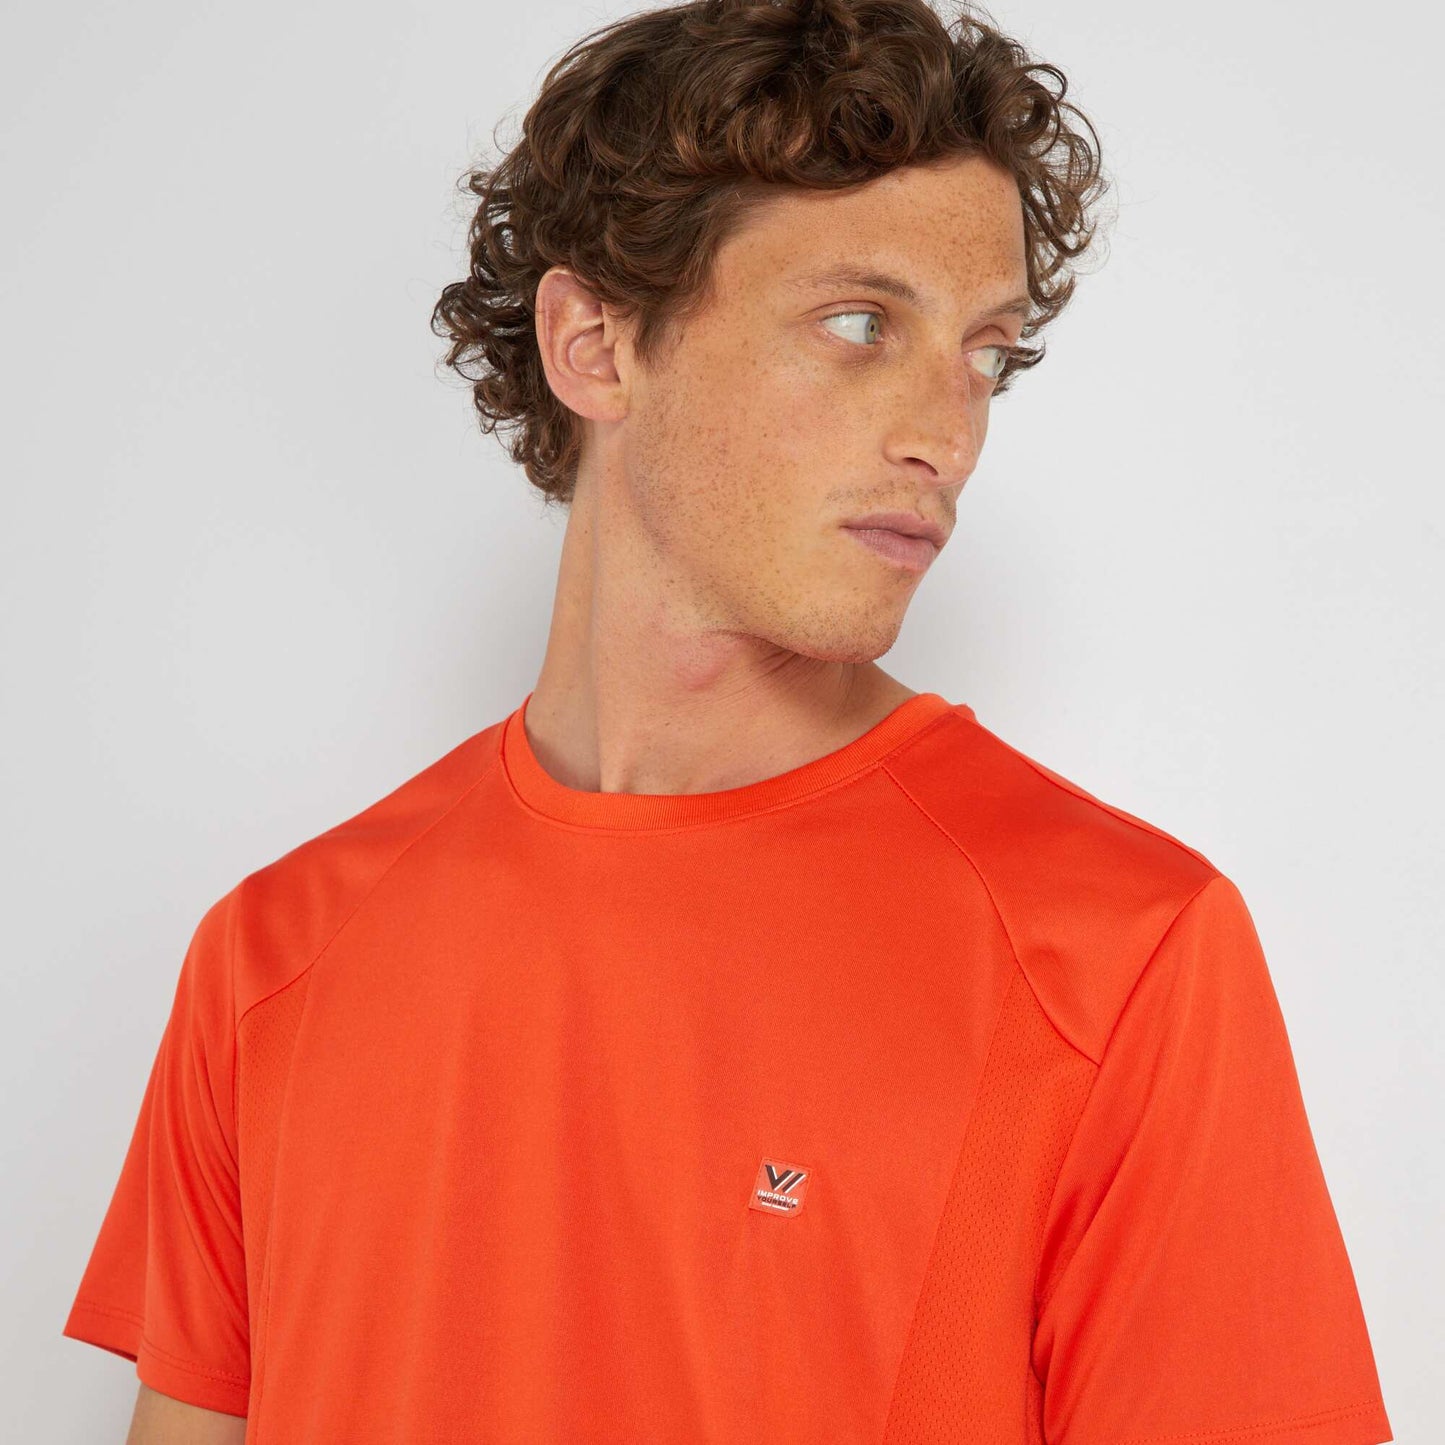 T-shirt de sport Orange